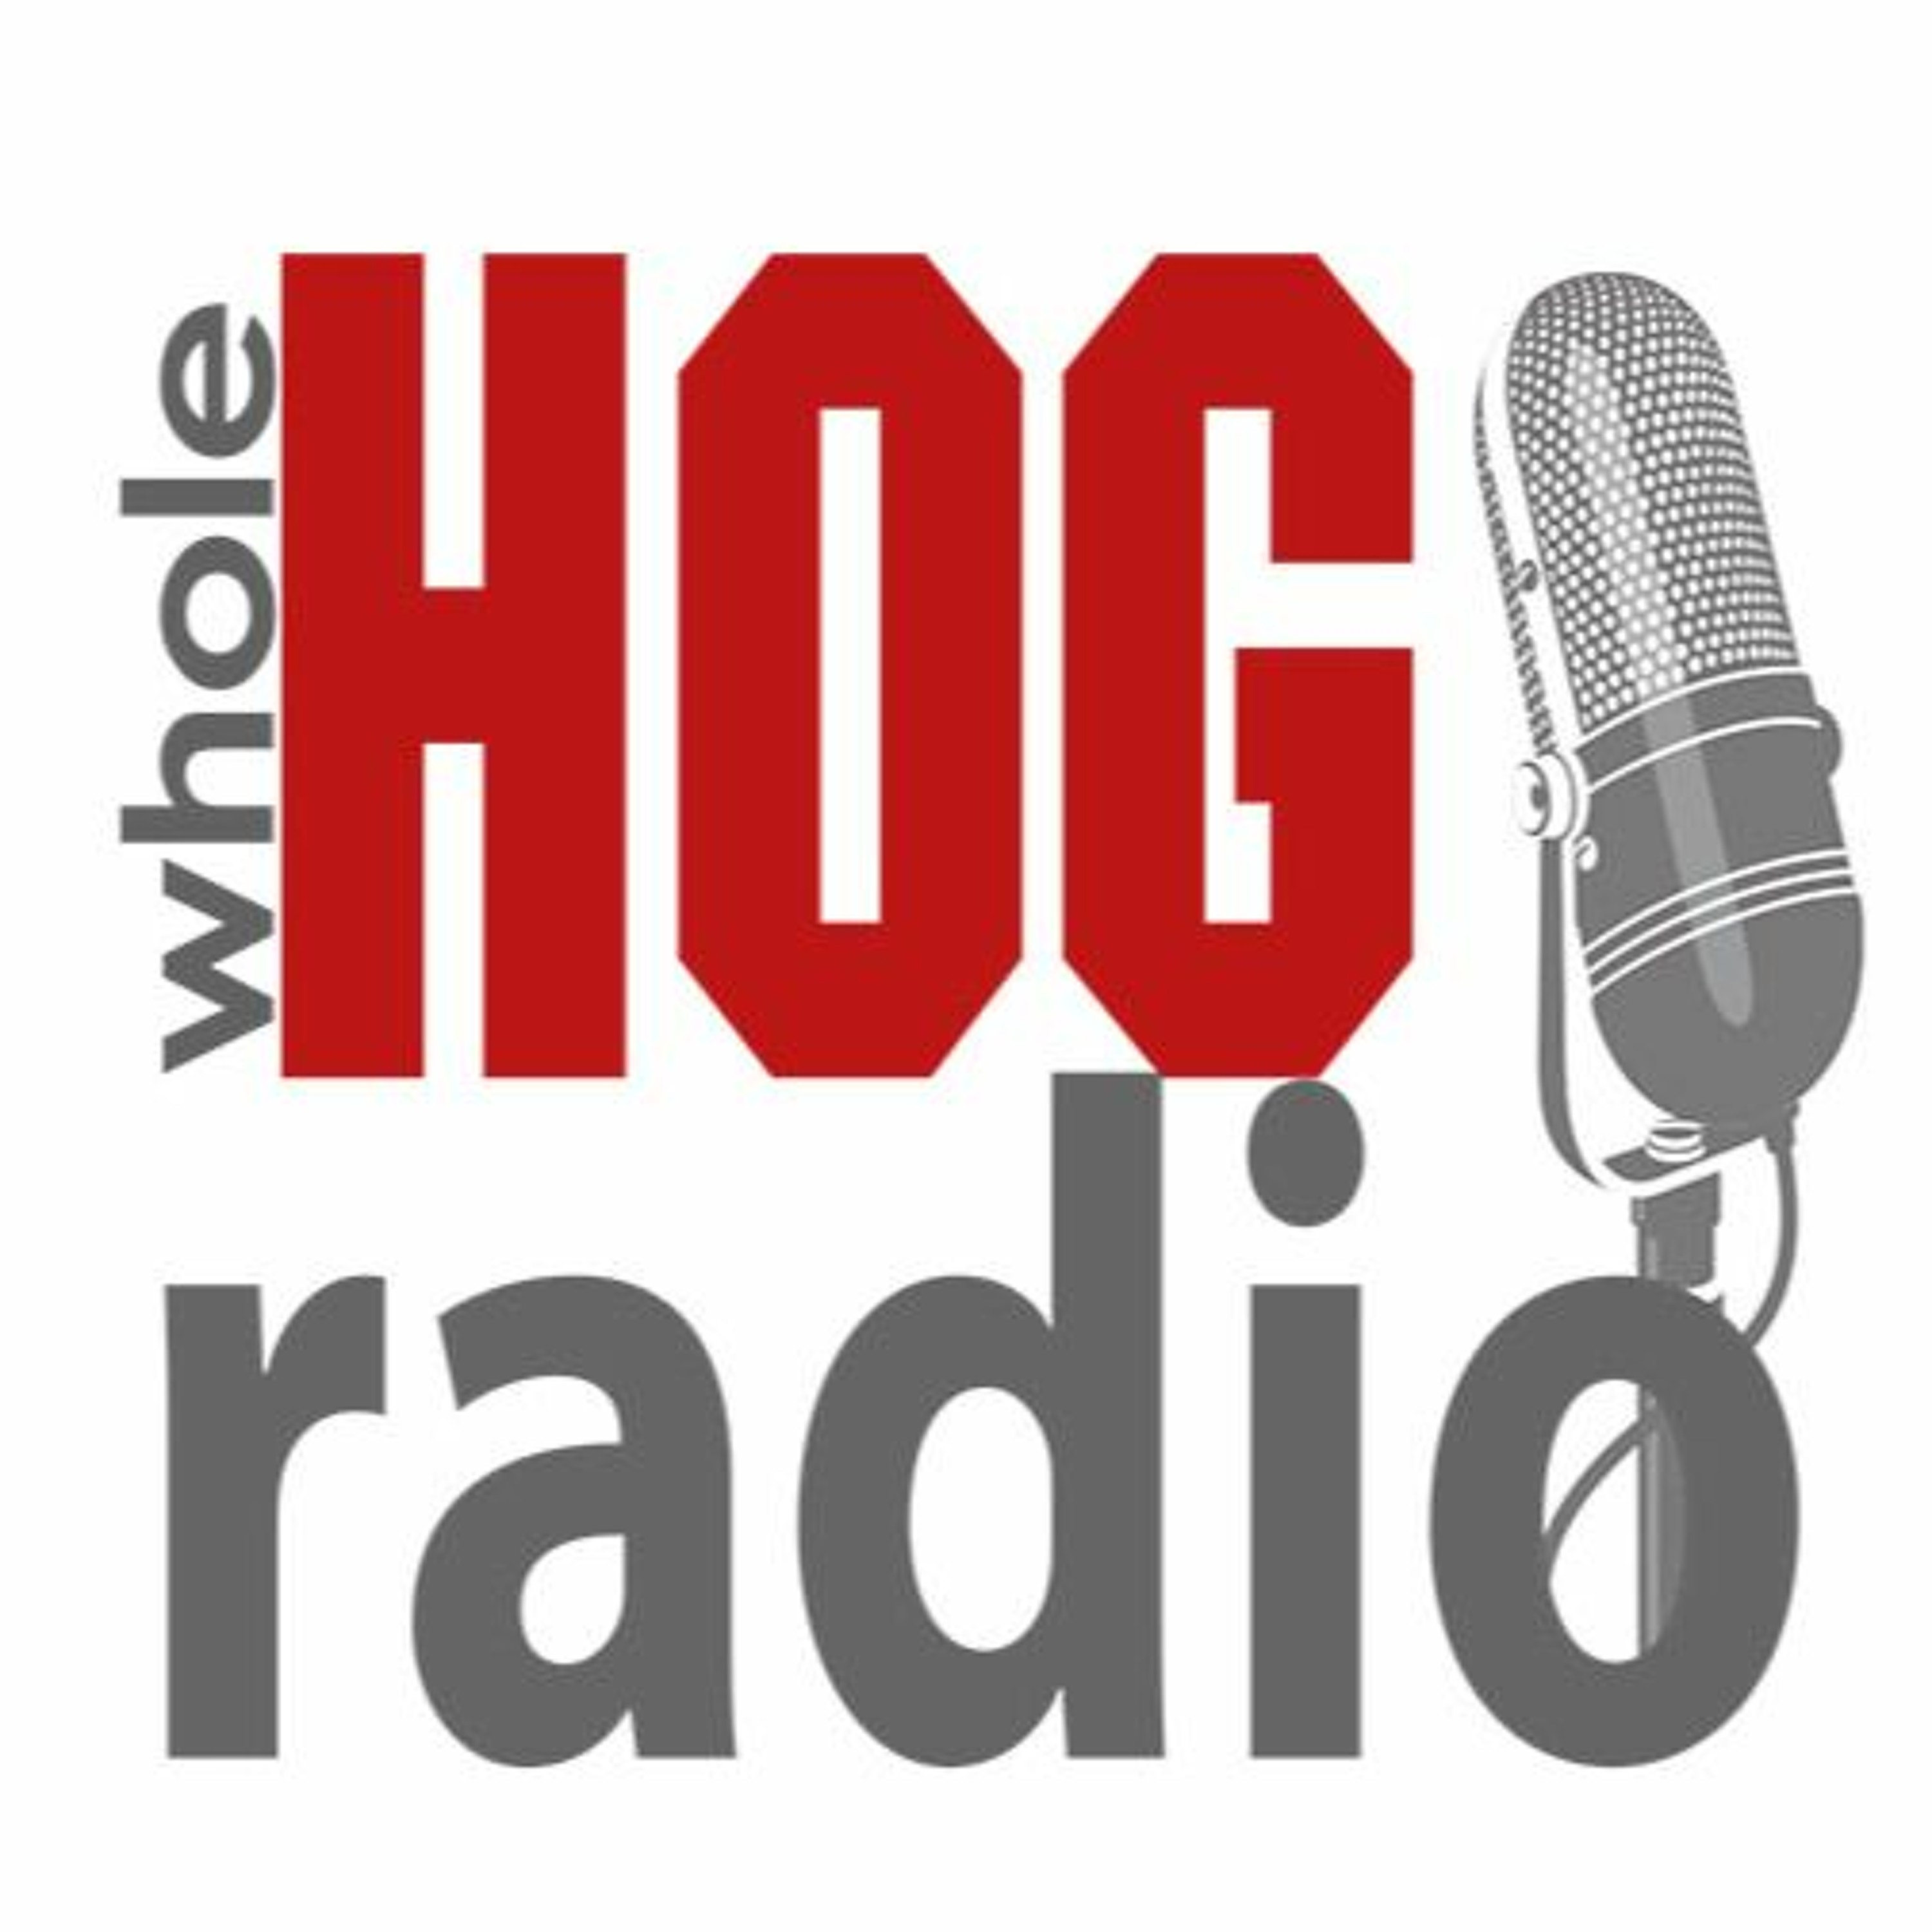 WholeHog Podcast: Arkansas vs. Auburn reaction